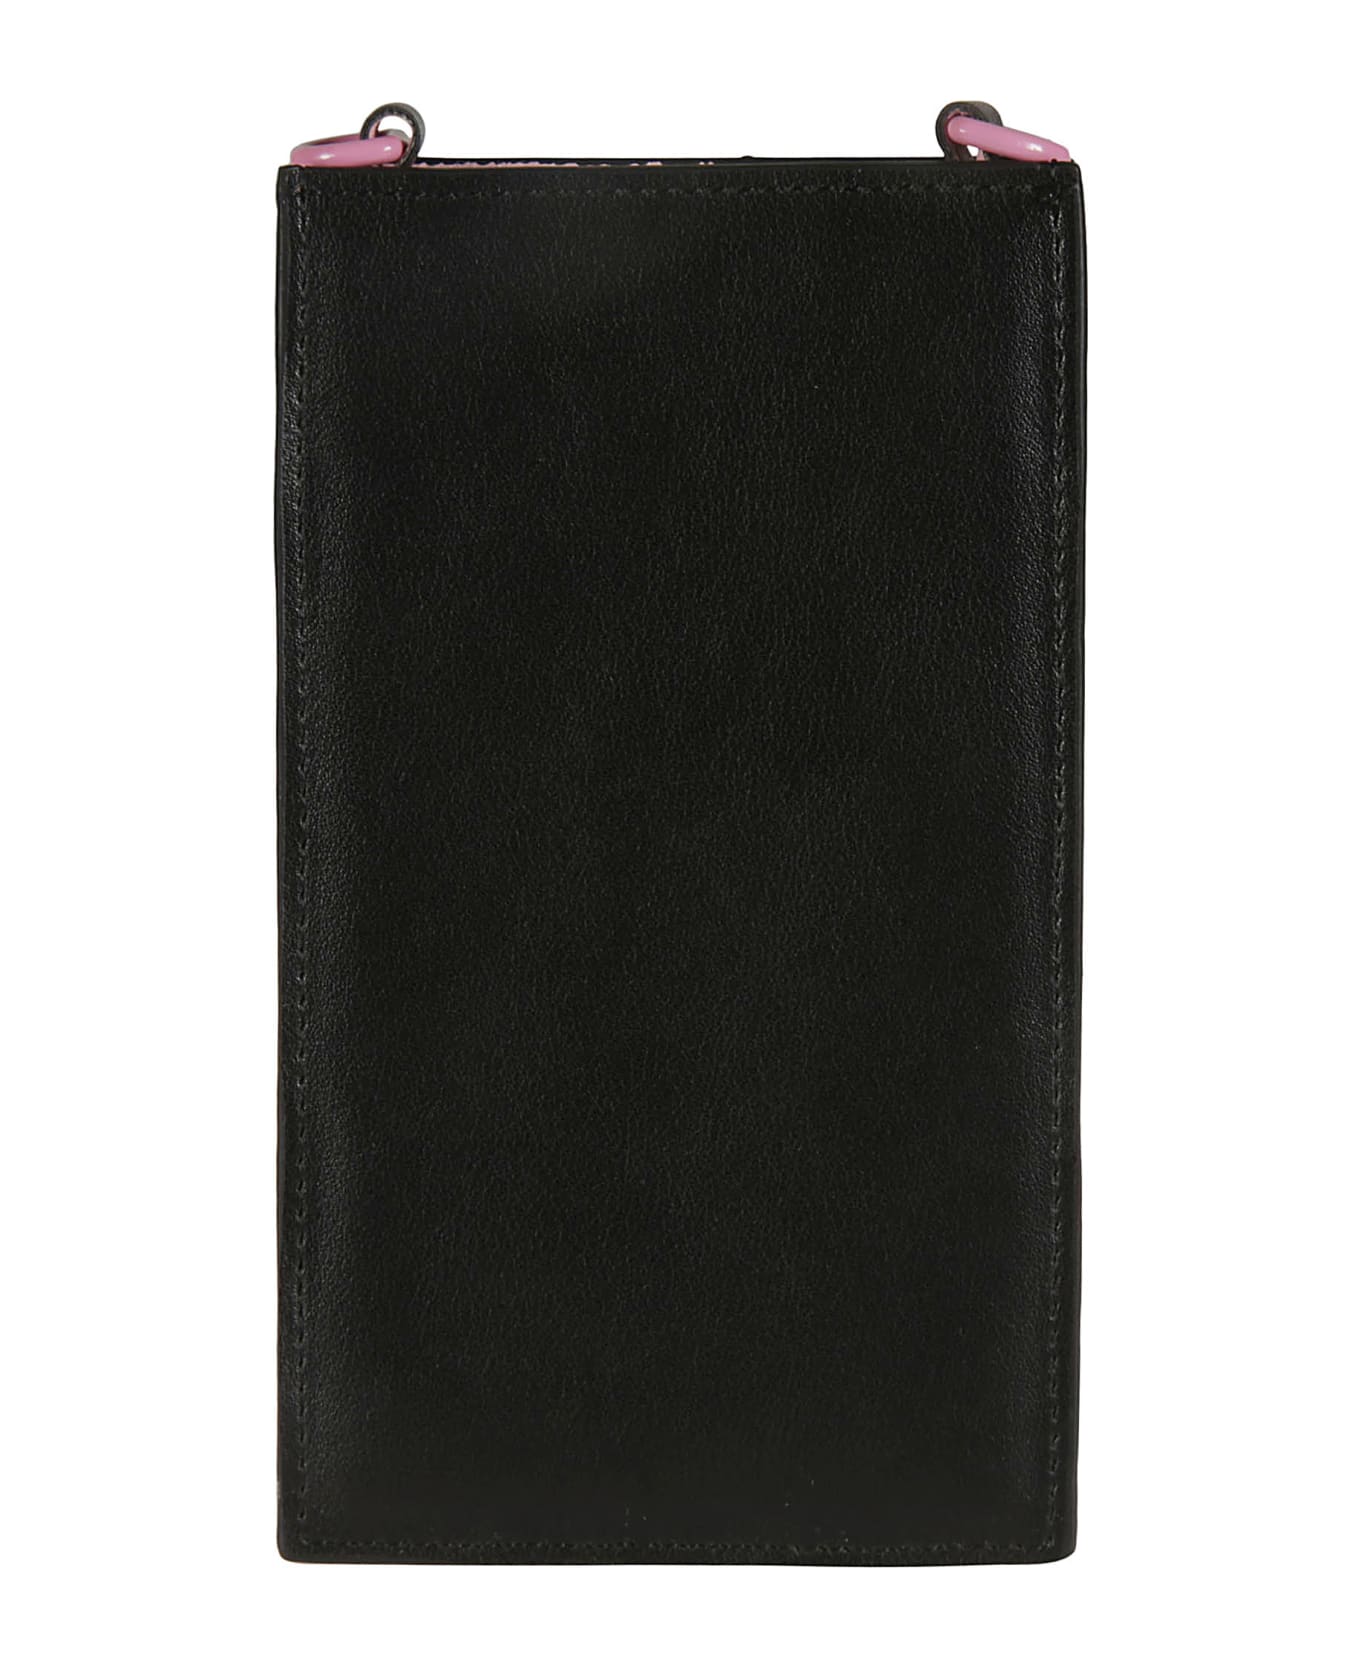 Chiara Ferragni Eyelike Iphone Case Bag - Black トートバッグ